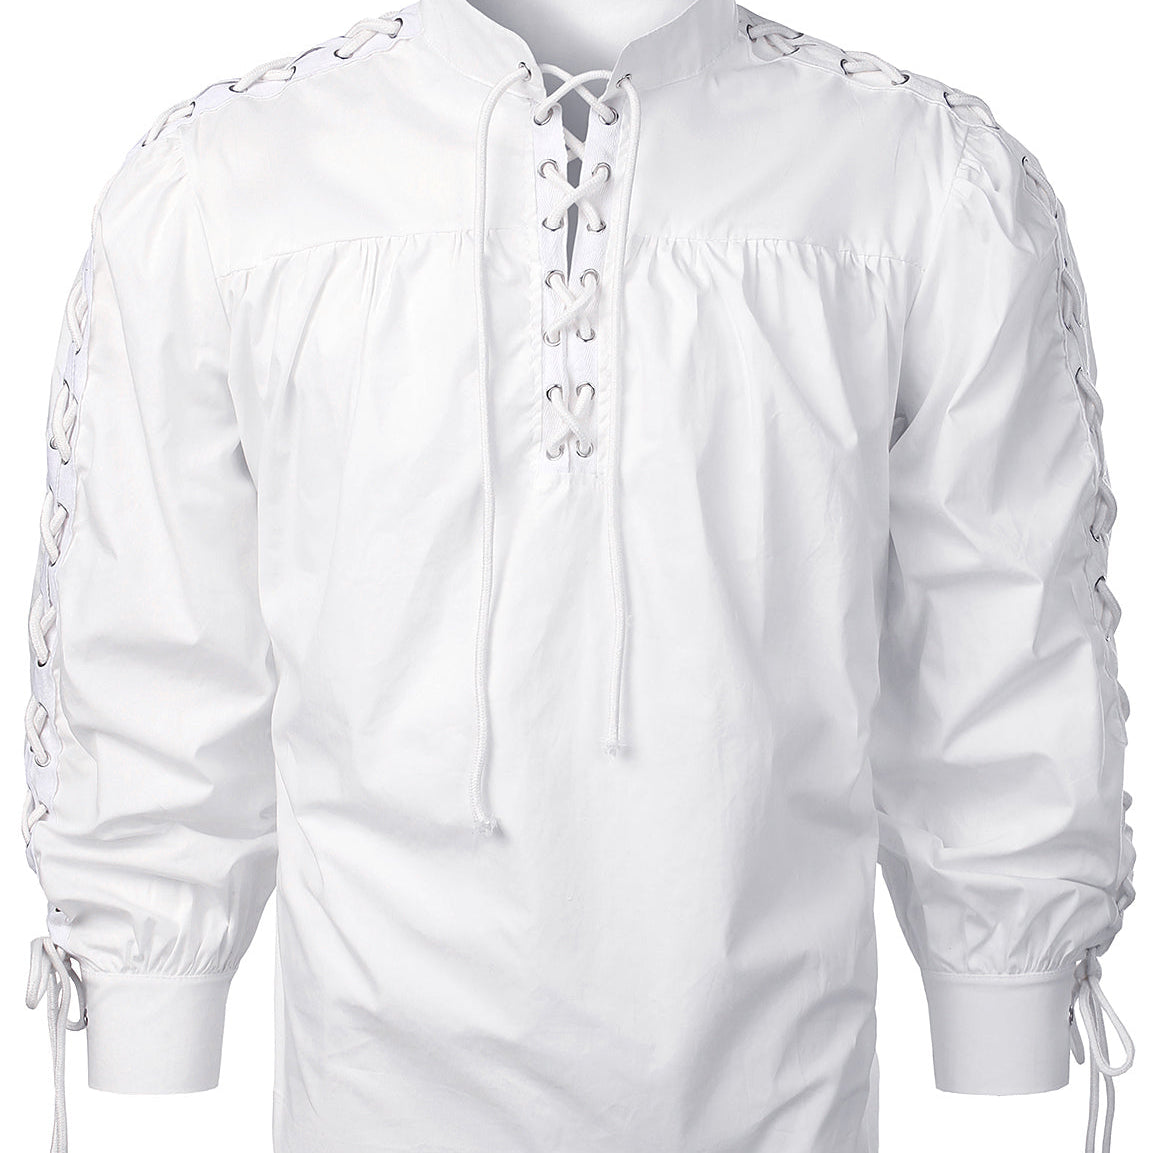 Men's Bandage Renaissance Gothic Pirate Cosplay Costume White Shirt